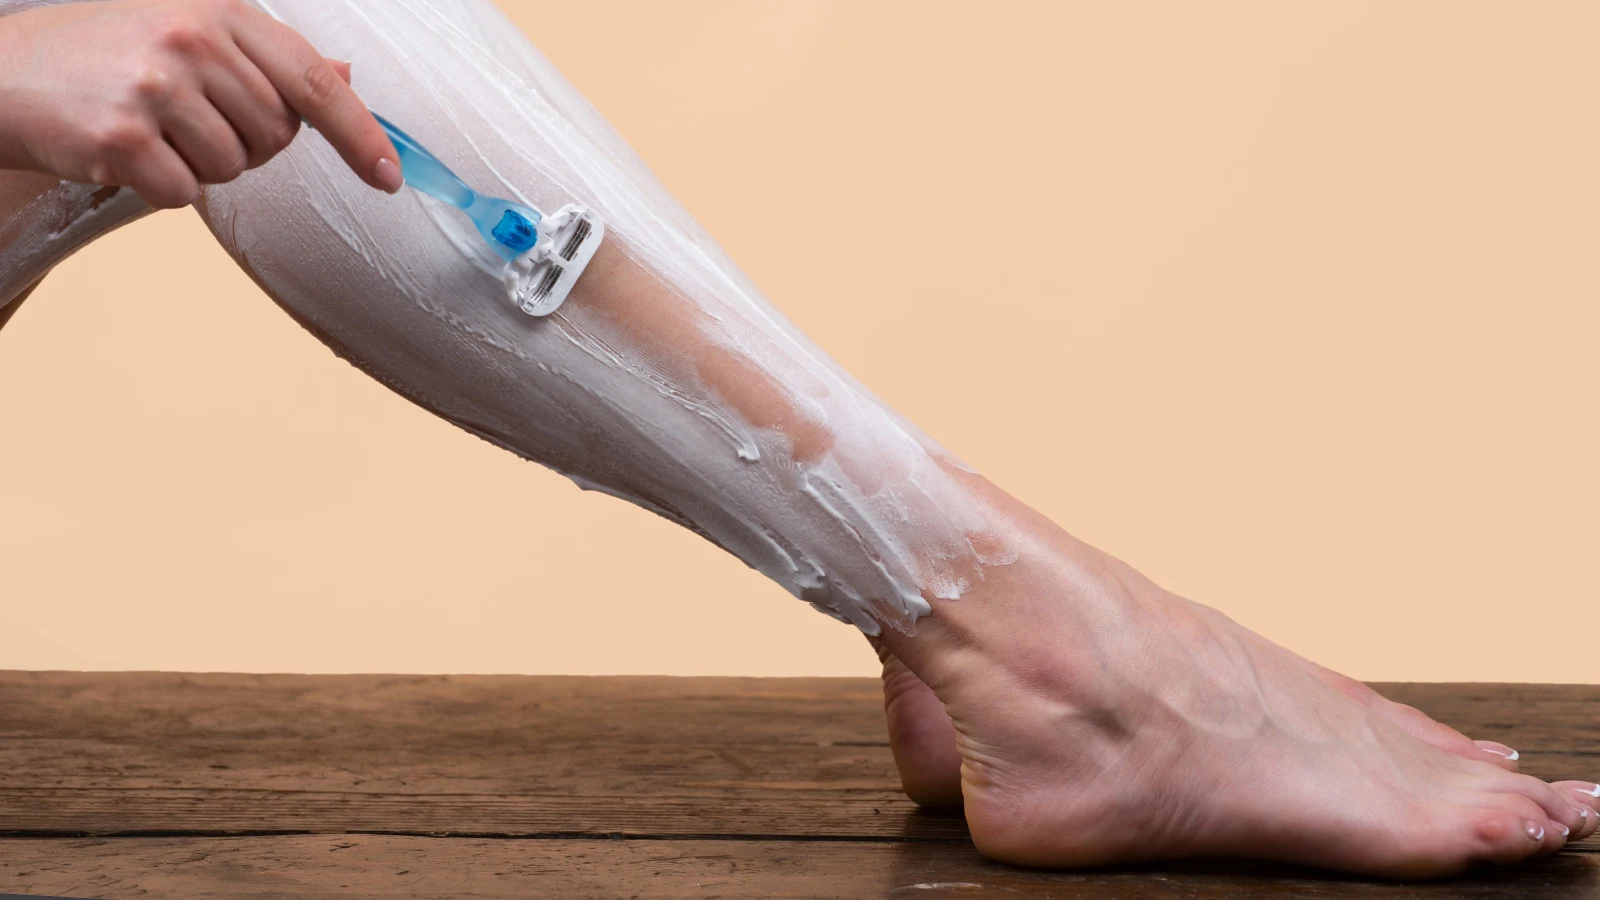 Femme se rasant la jambe avec du gel à raser